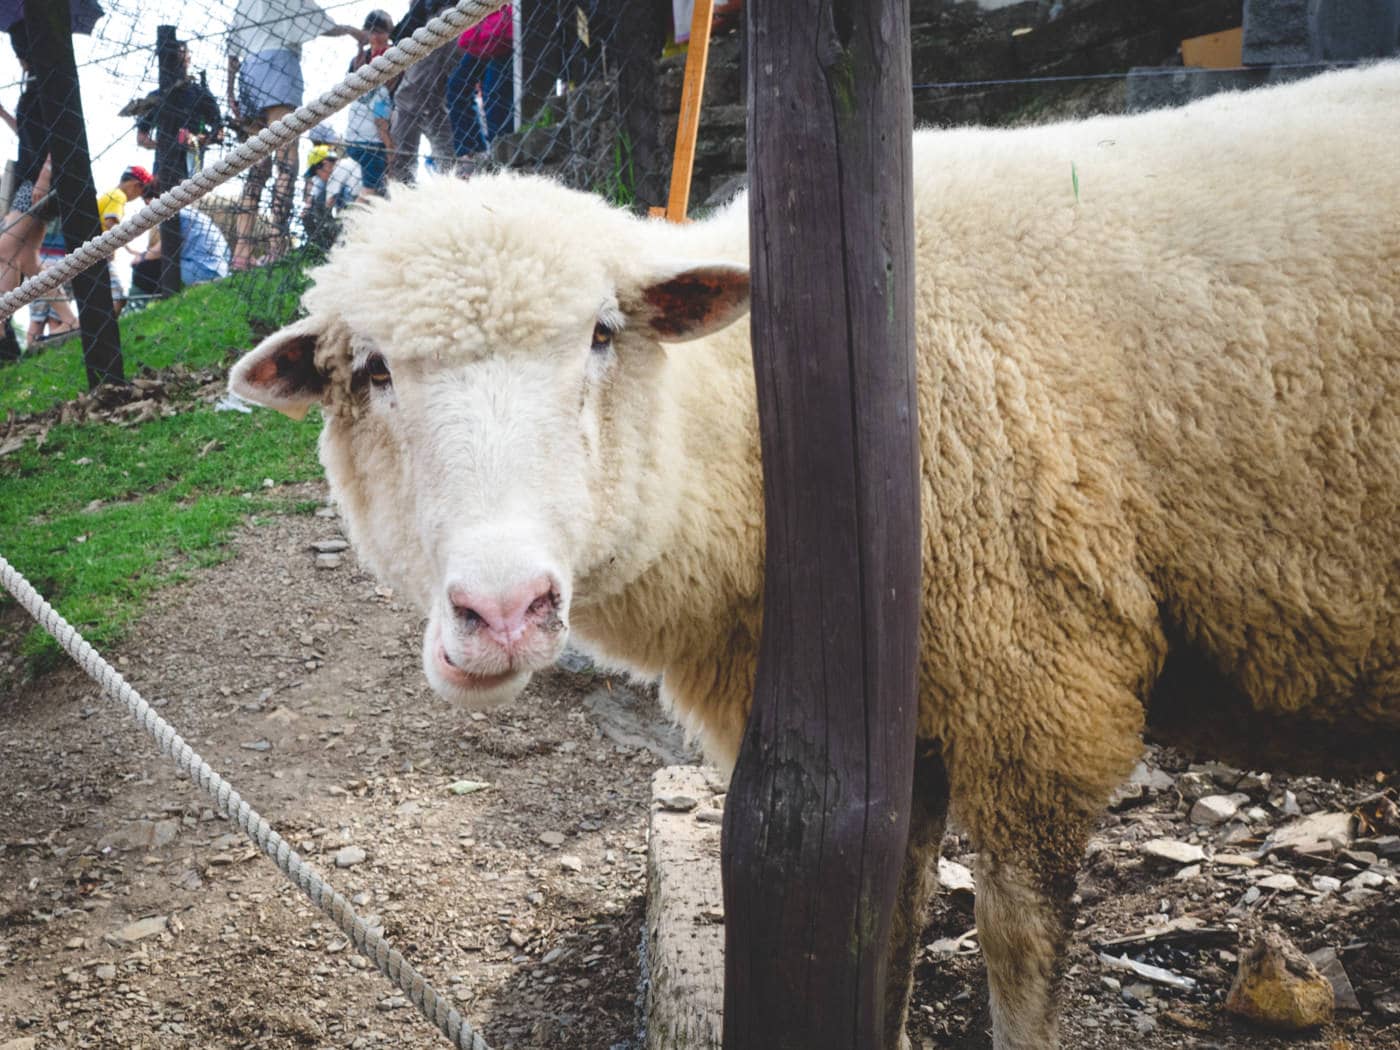 Taiwan - Qingjing Farm - Sheep smirks